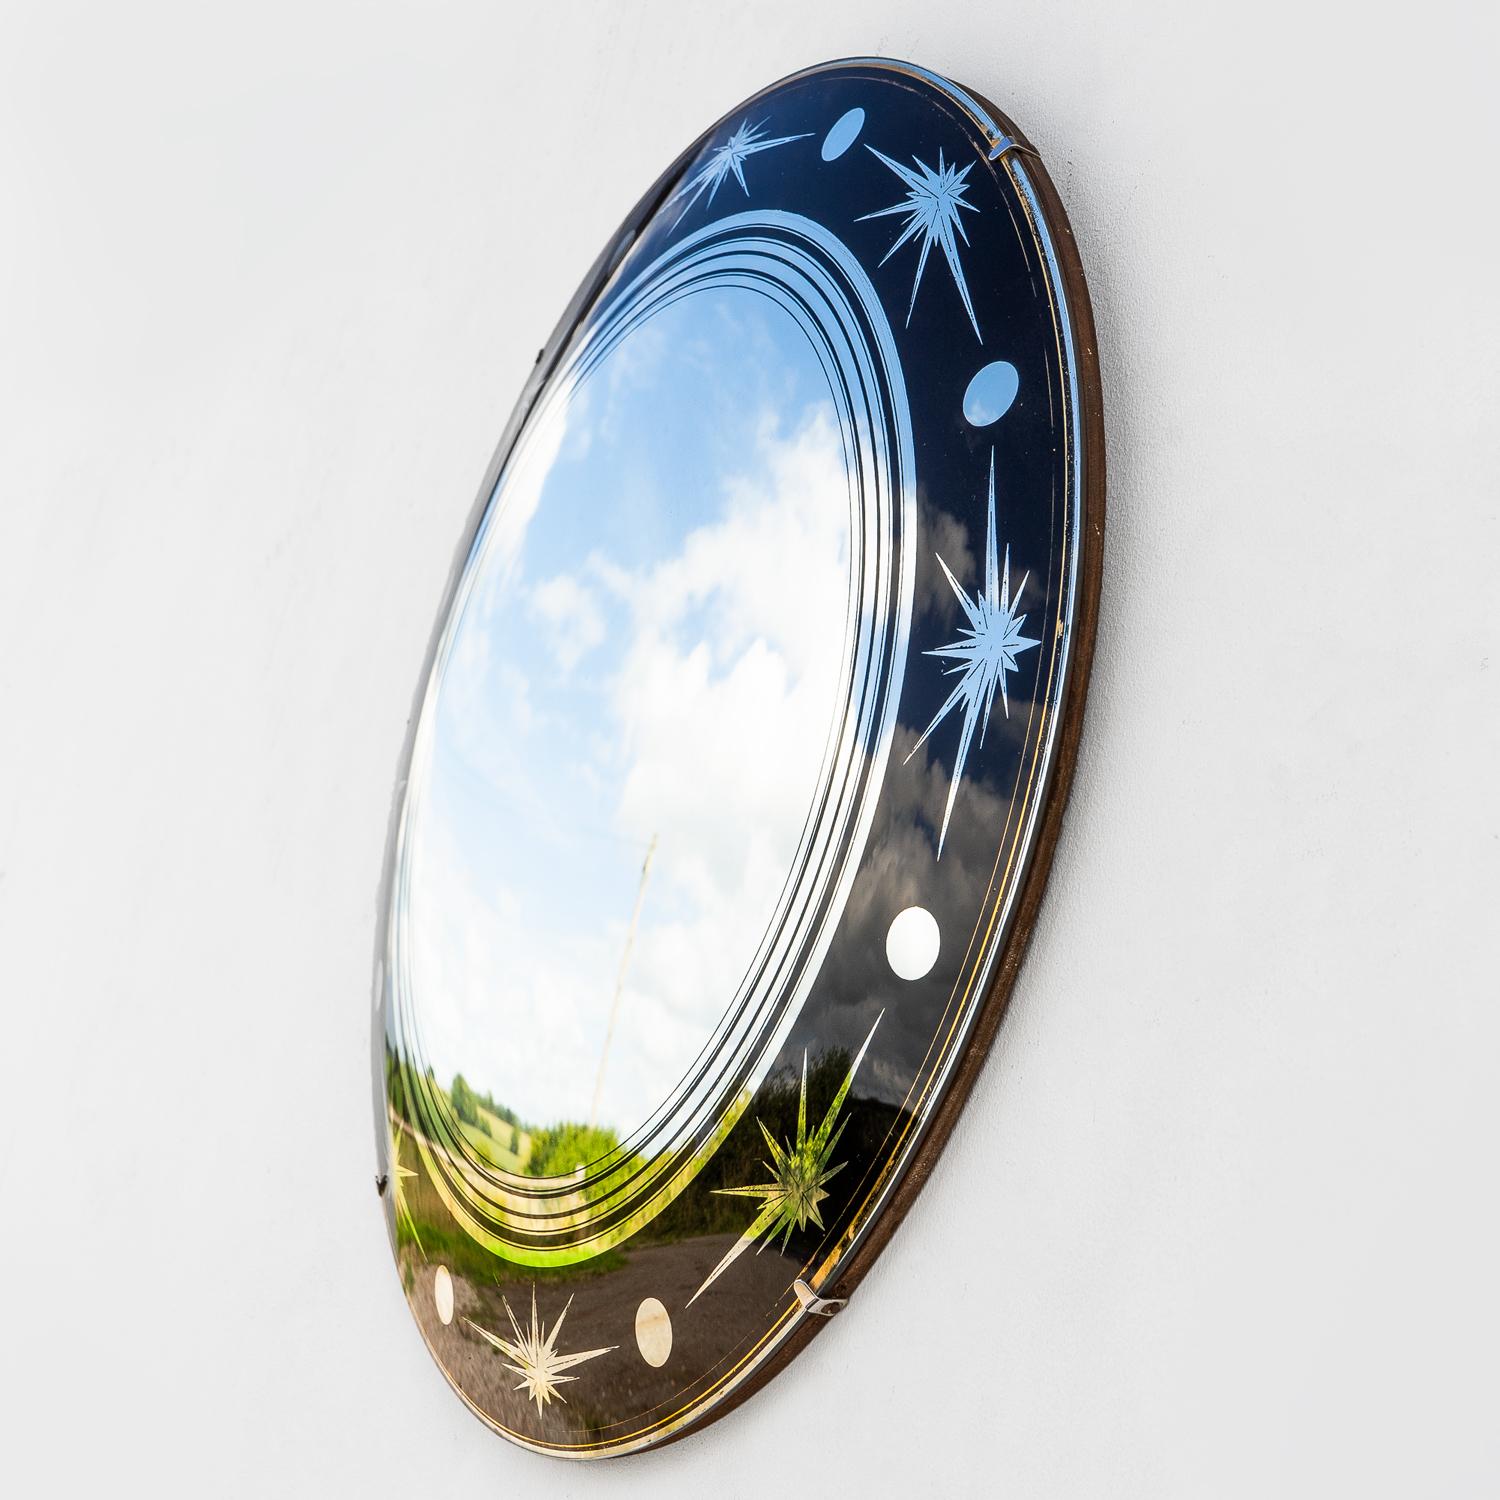 Vintage Italian Circular Convex Wall Mirror With Starburst Design 1950s 4